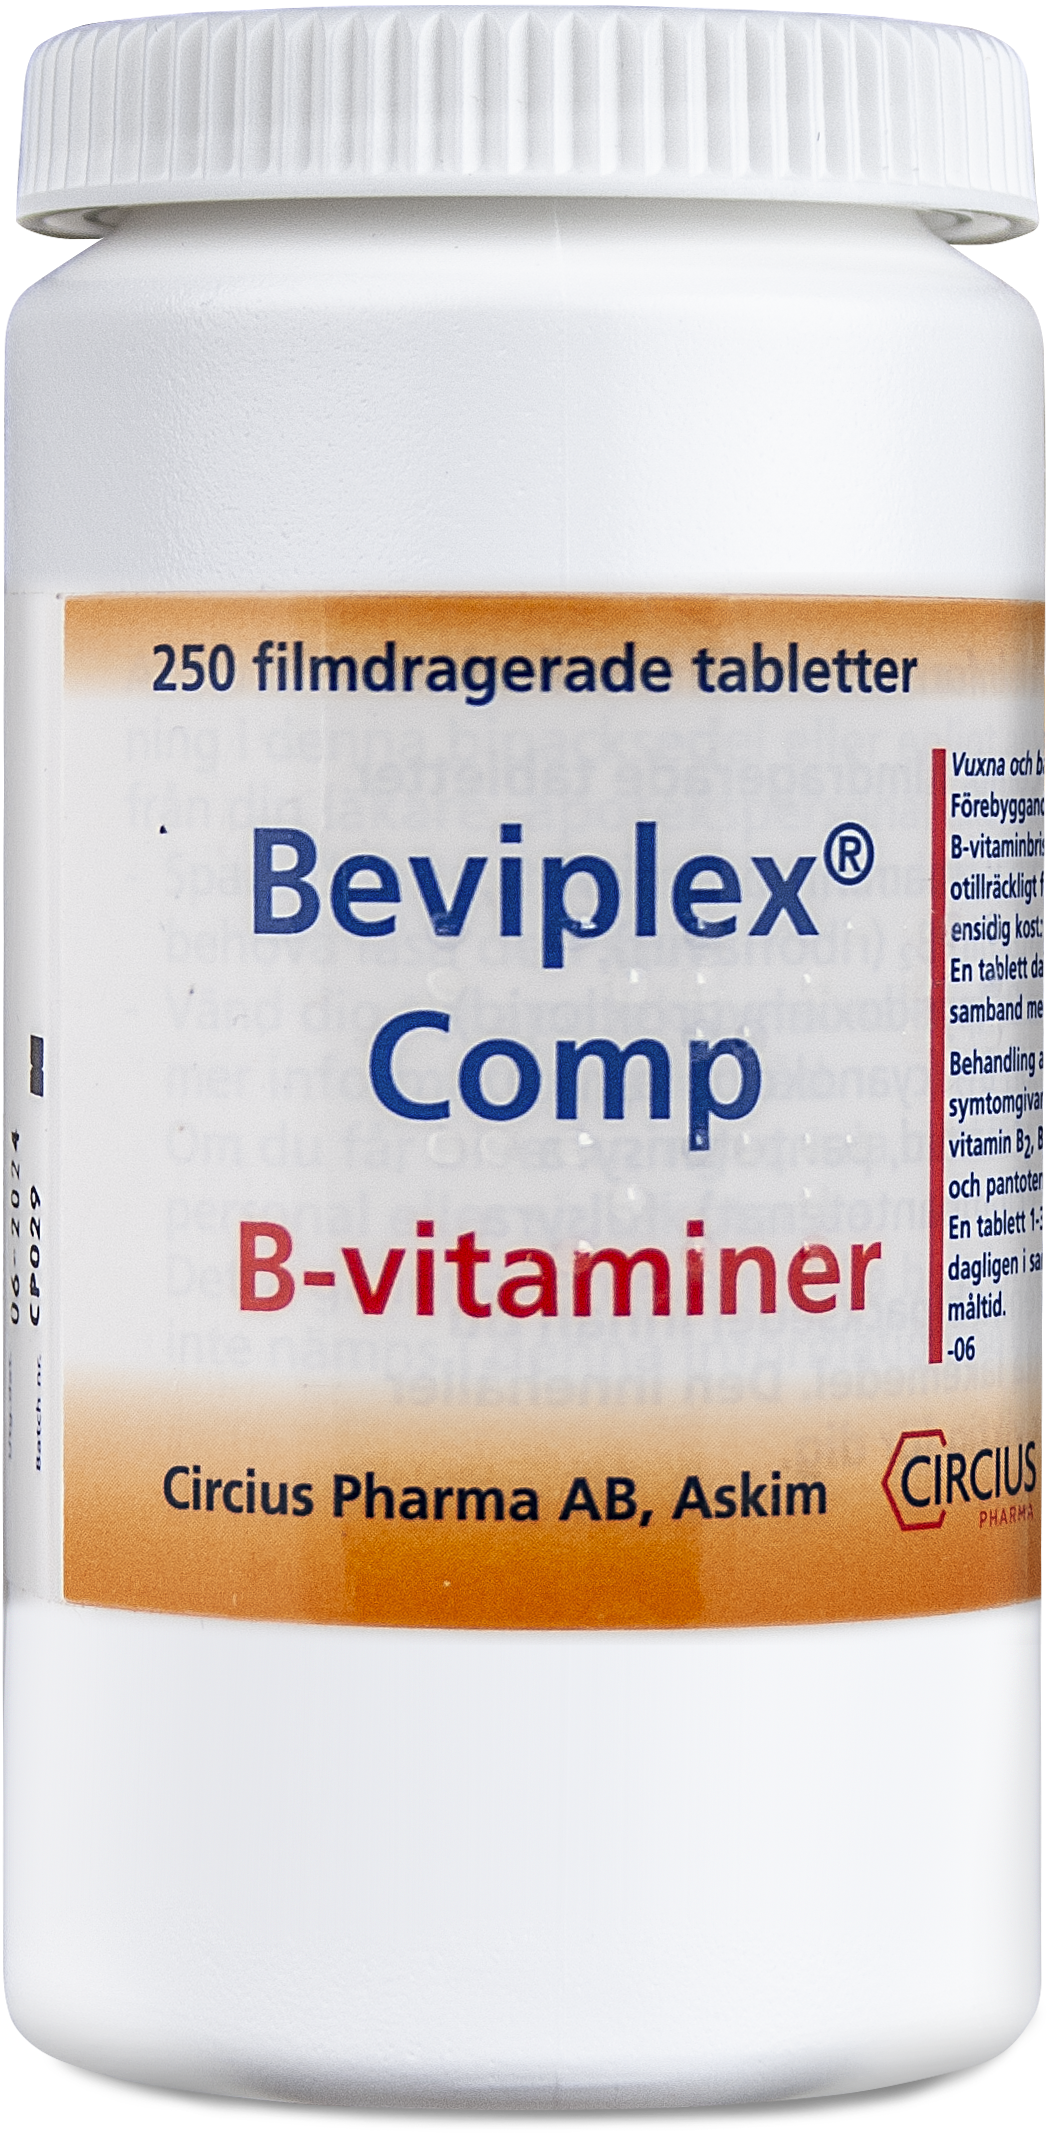 Beviplex Comp 250 tabletter